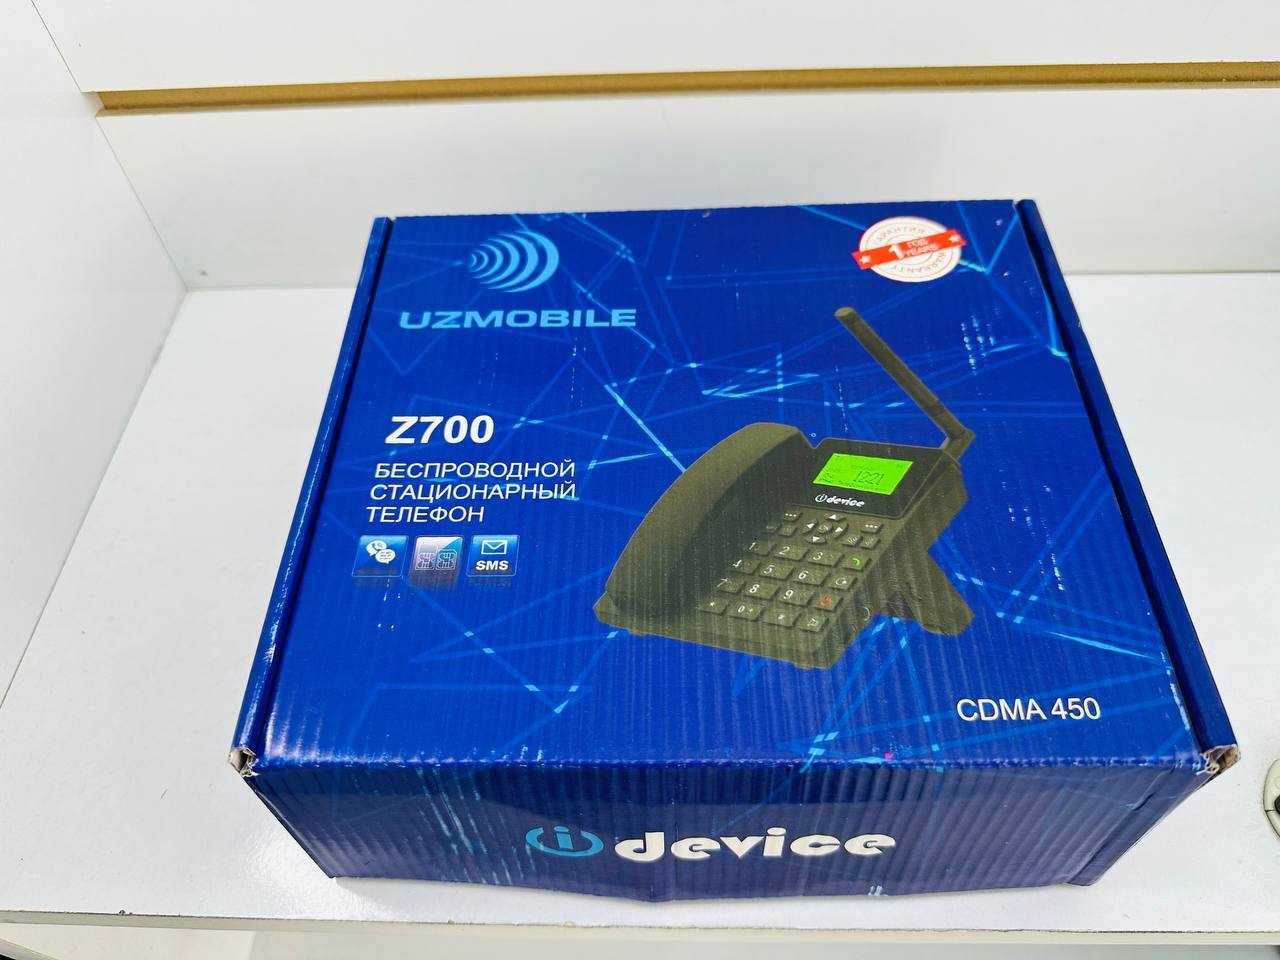 CDMA-450 Z700 стационар телефон Uzmobile